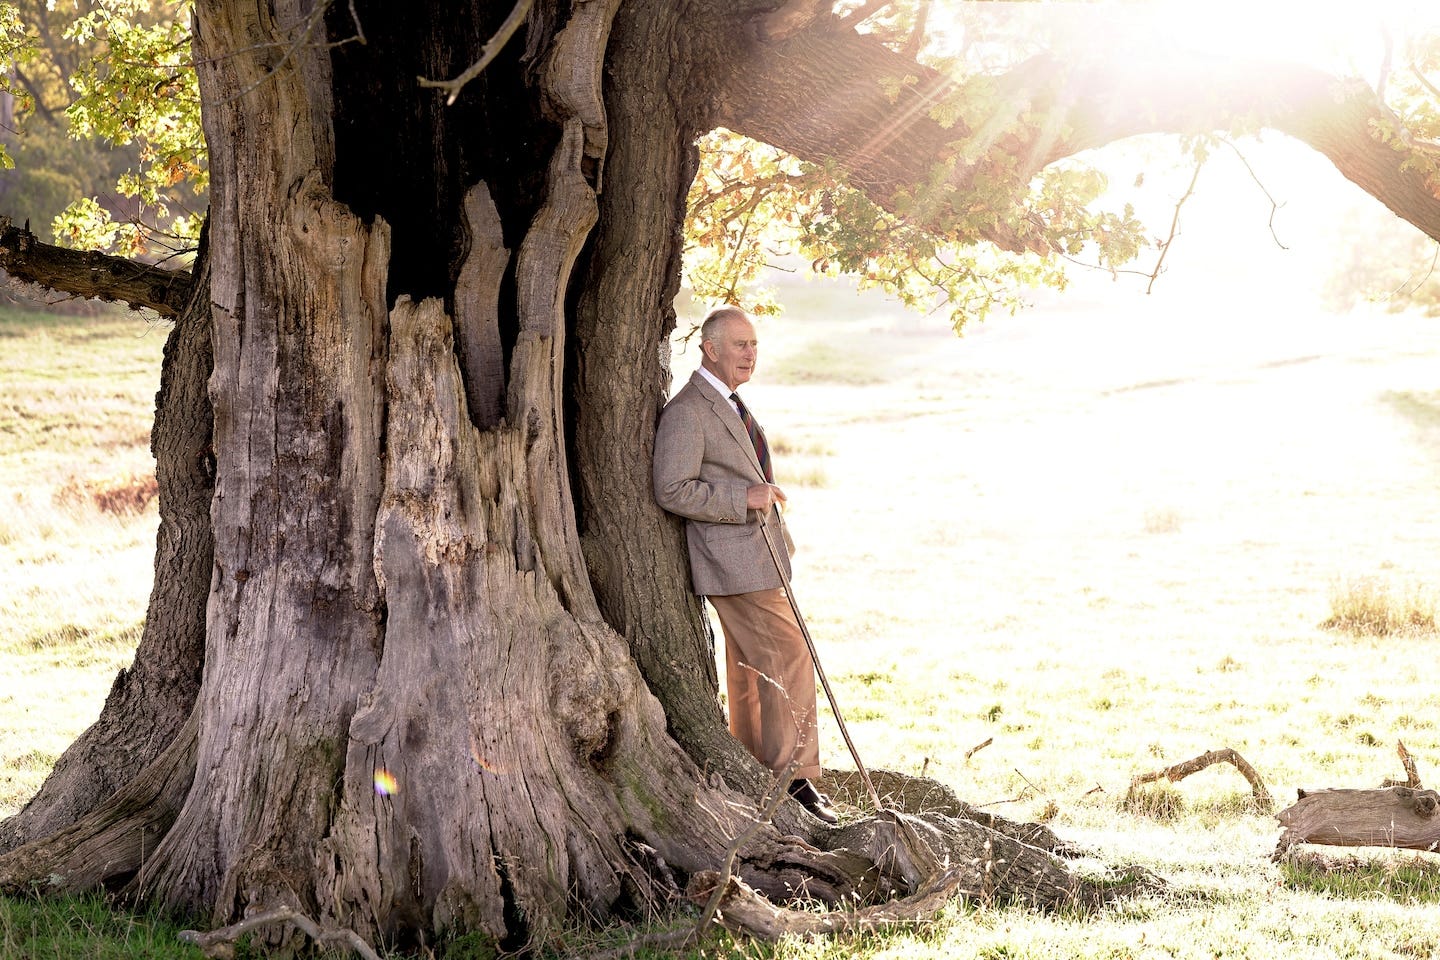 King Charles 74th birthday photo embraces tree-talking ...